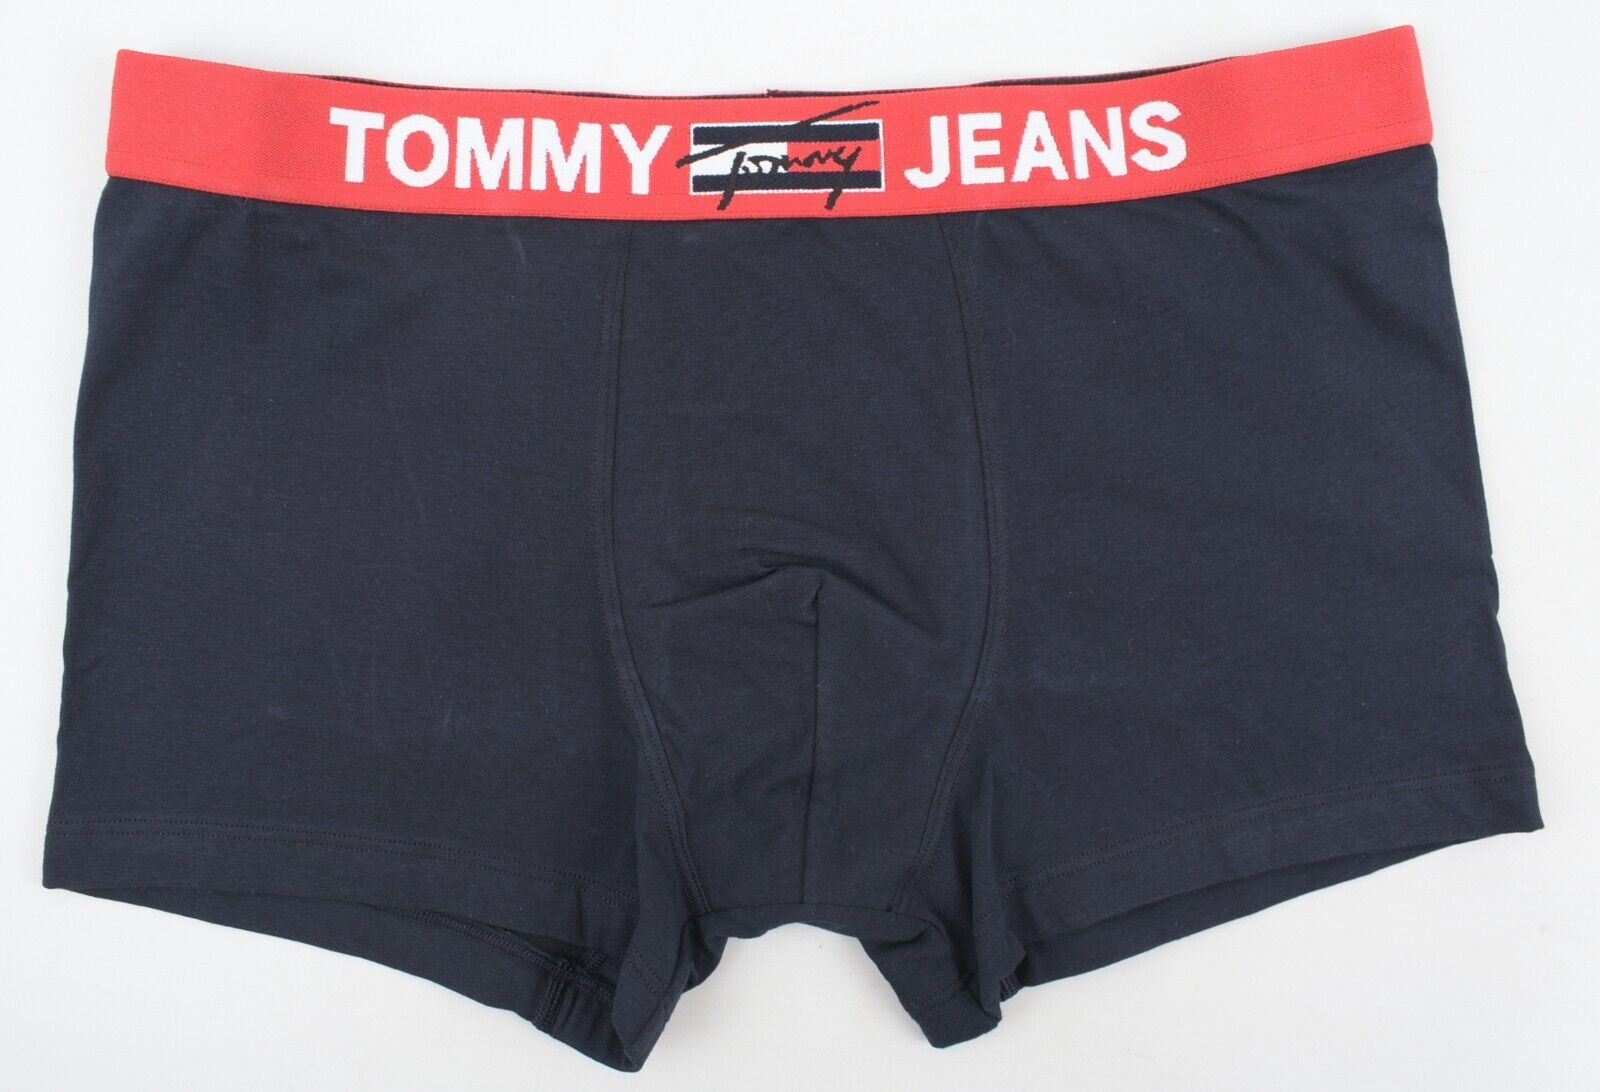 TOMMY HILFIGER Underwear: Men's Boxer Trunk, Navy Blue, size L